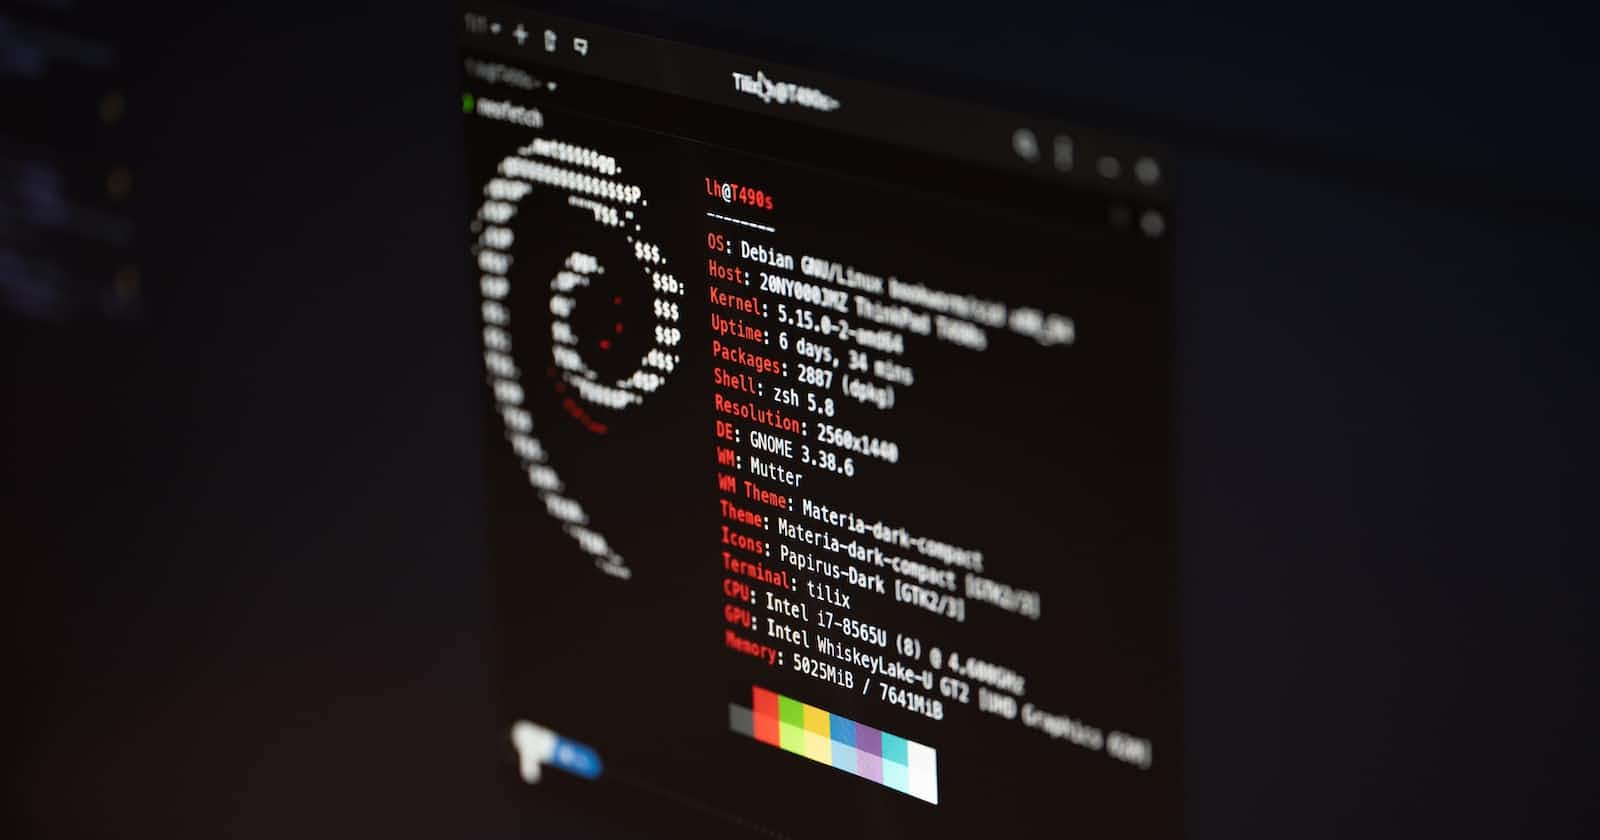 Change desktop environment on Linux